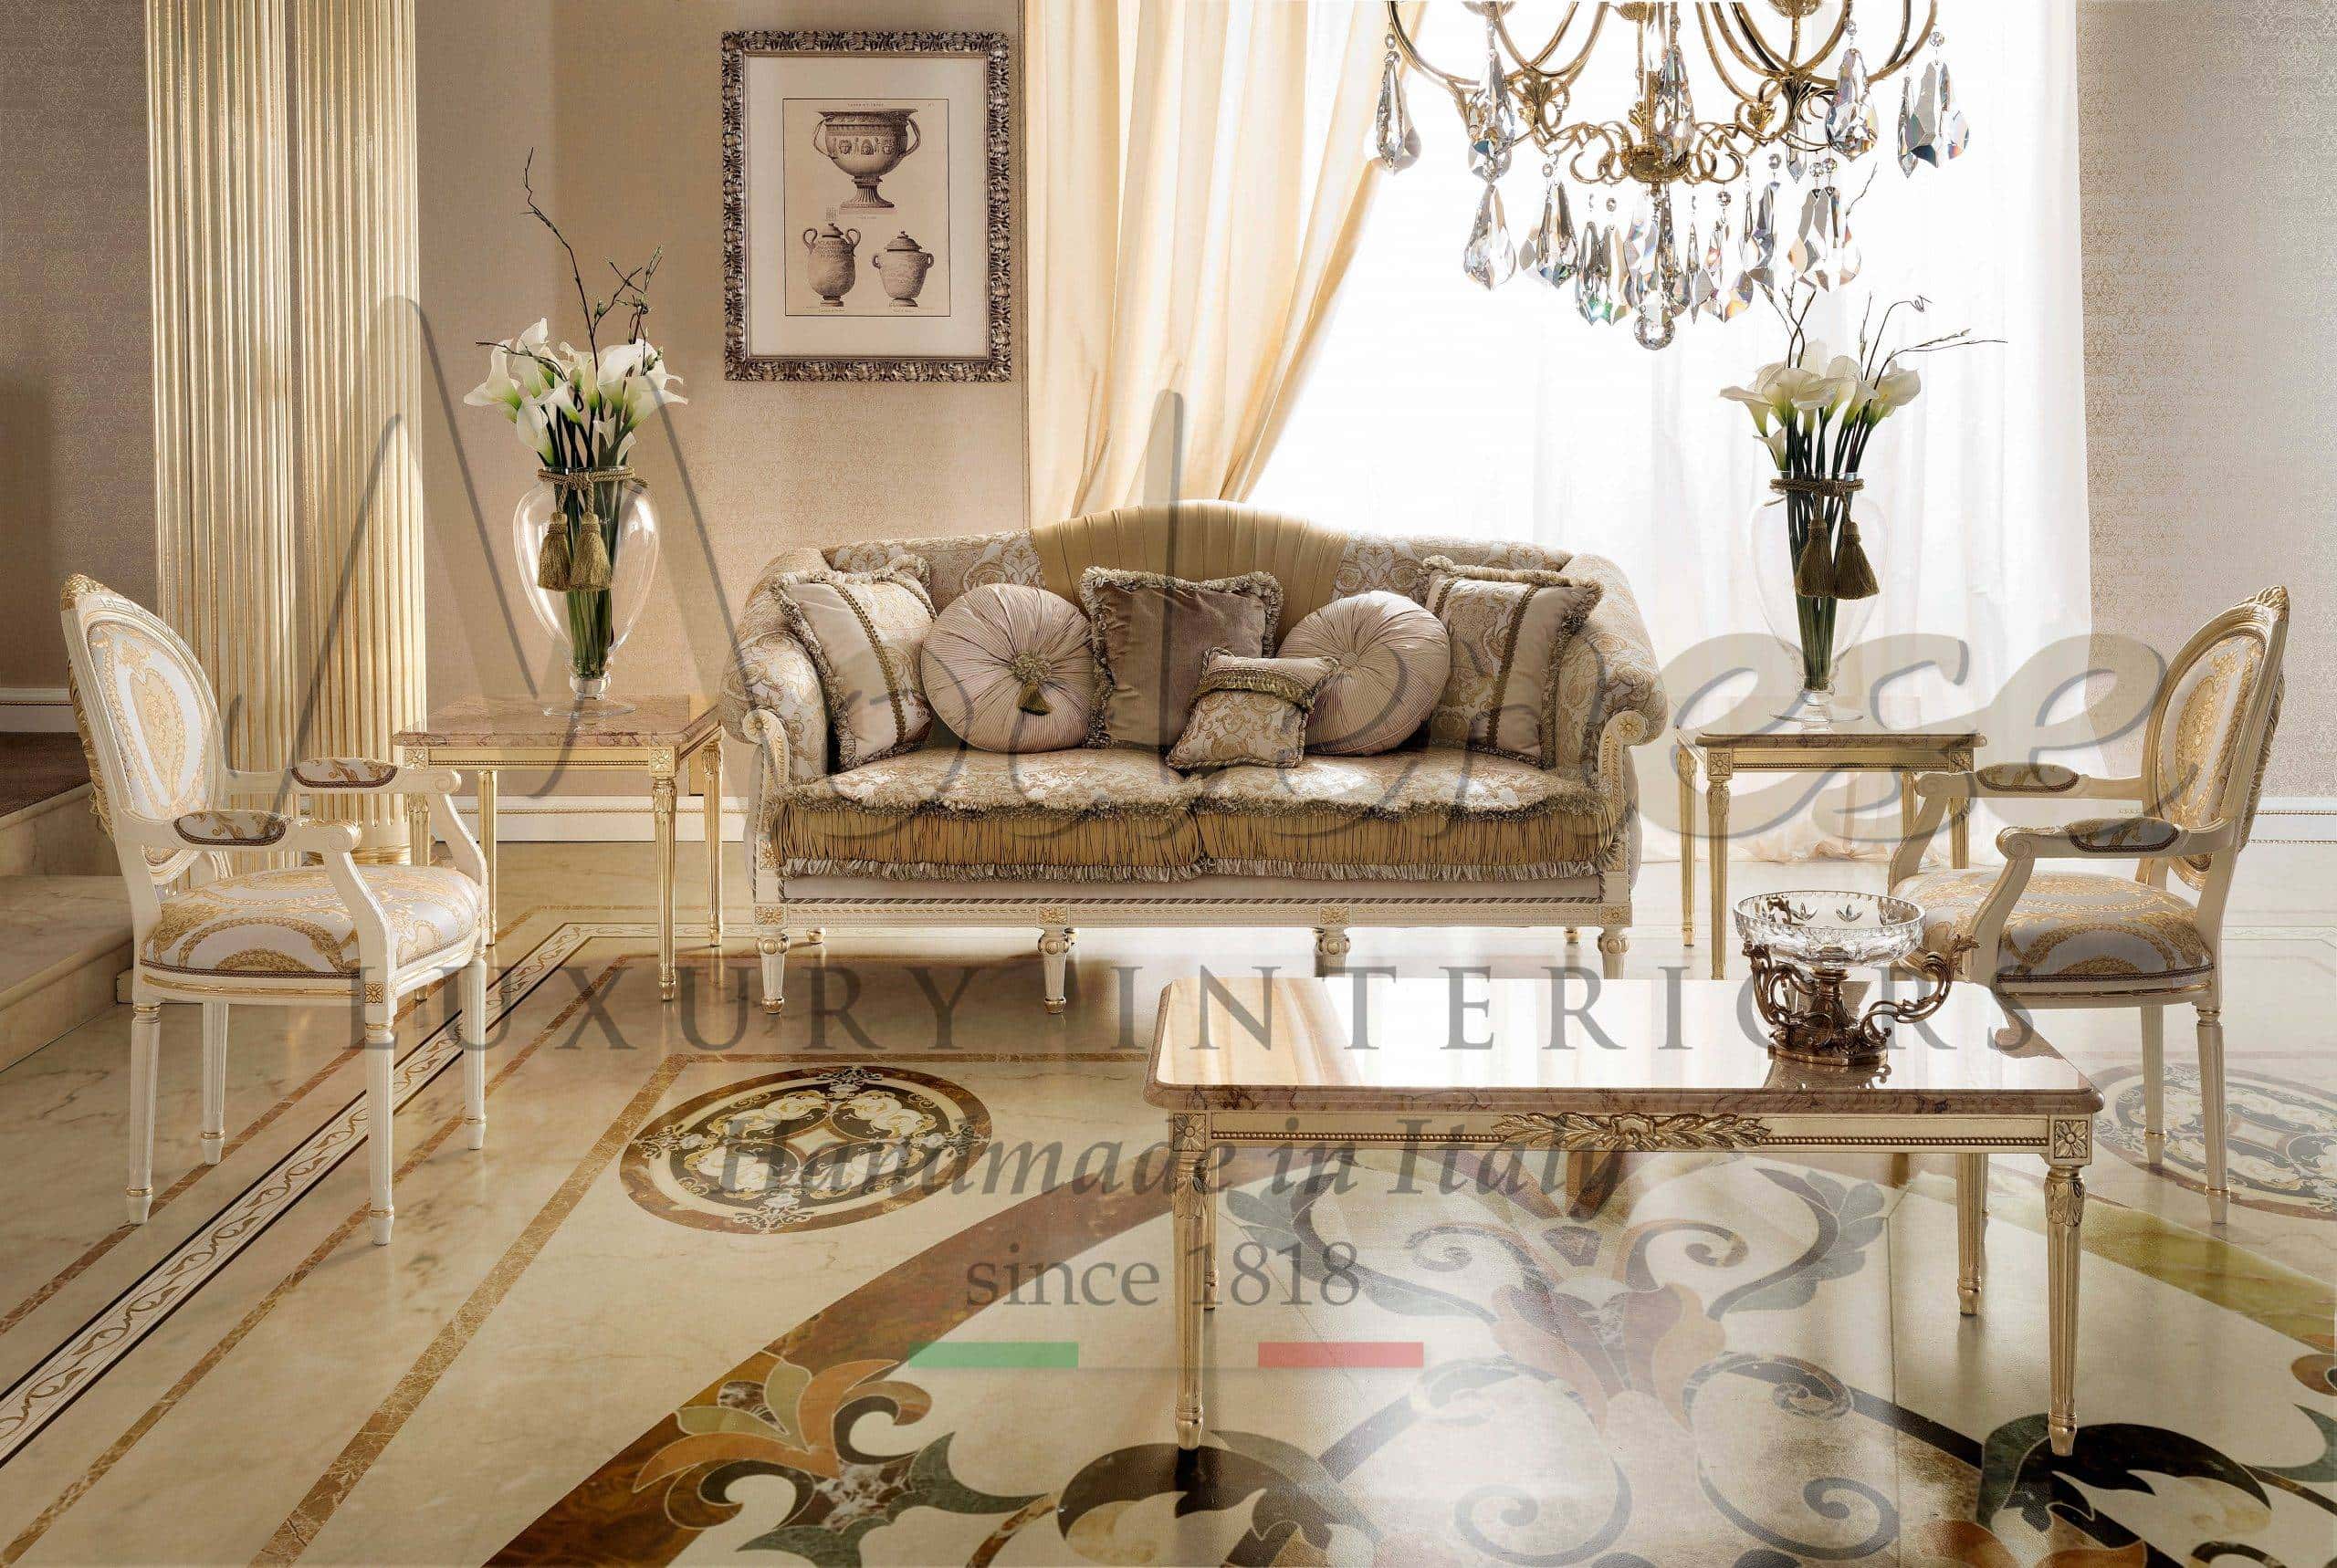 italian furniture for living room